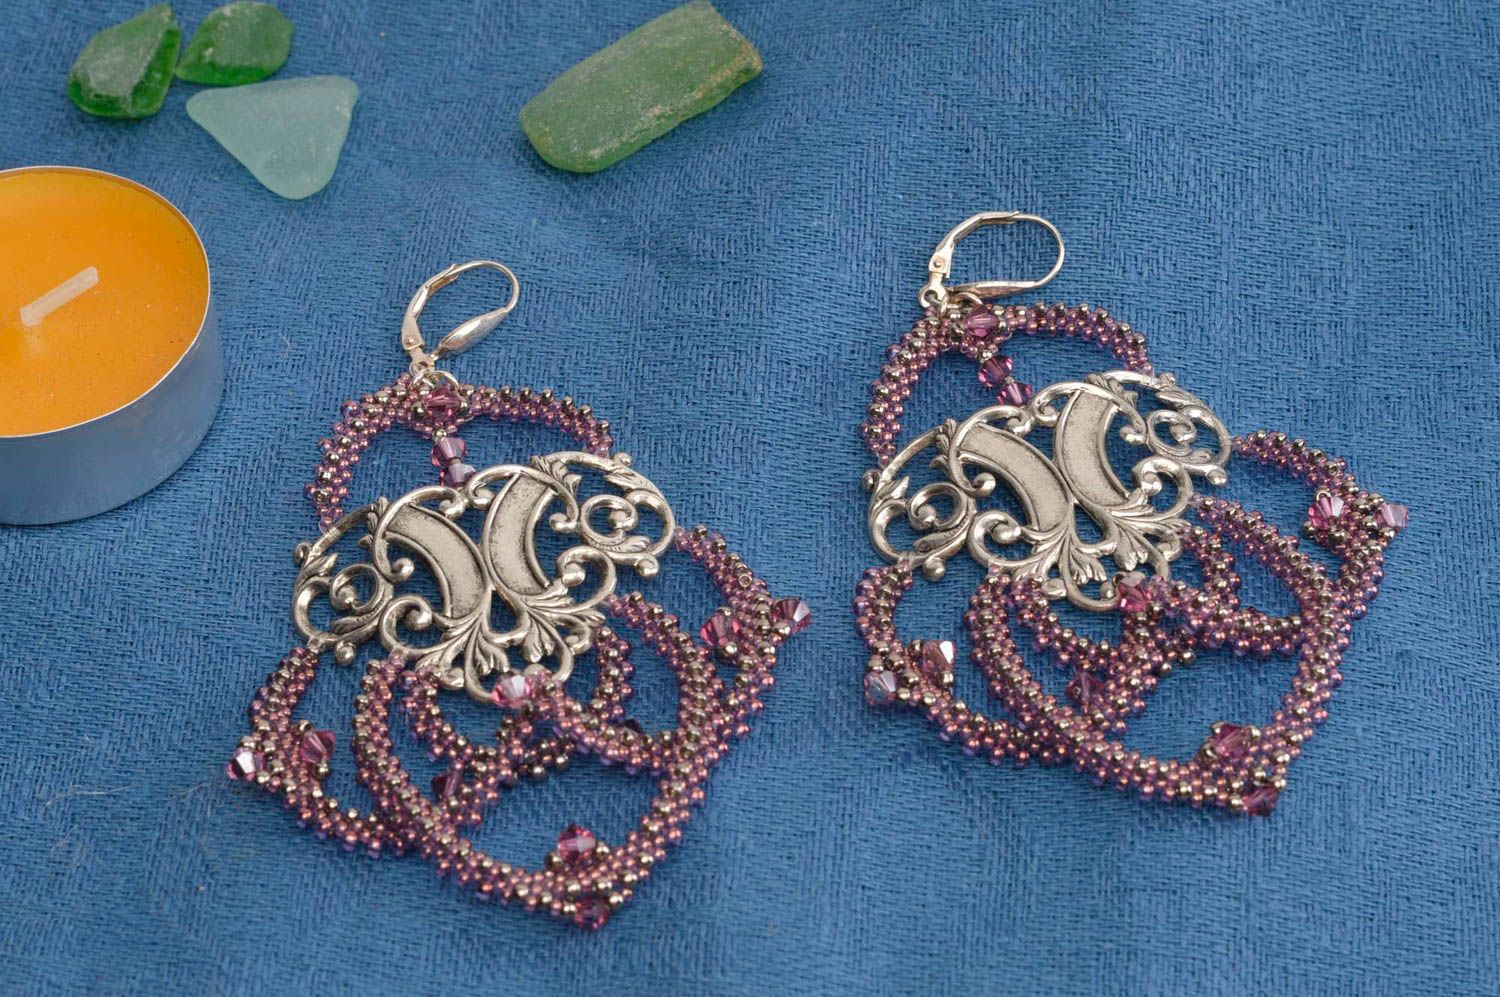 Handmade earrings with beads shiny earrings evening earrings for girls photo 1